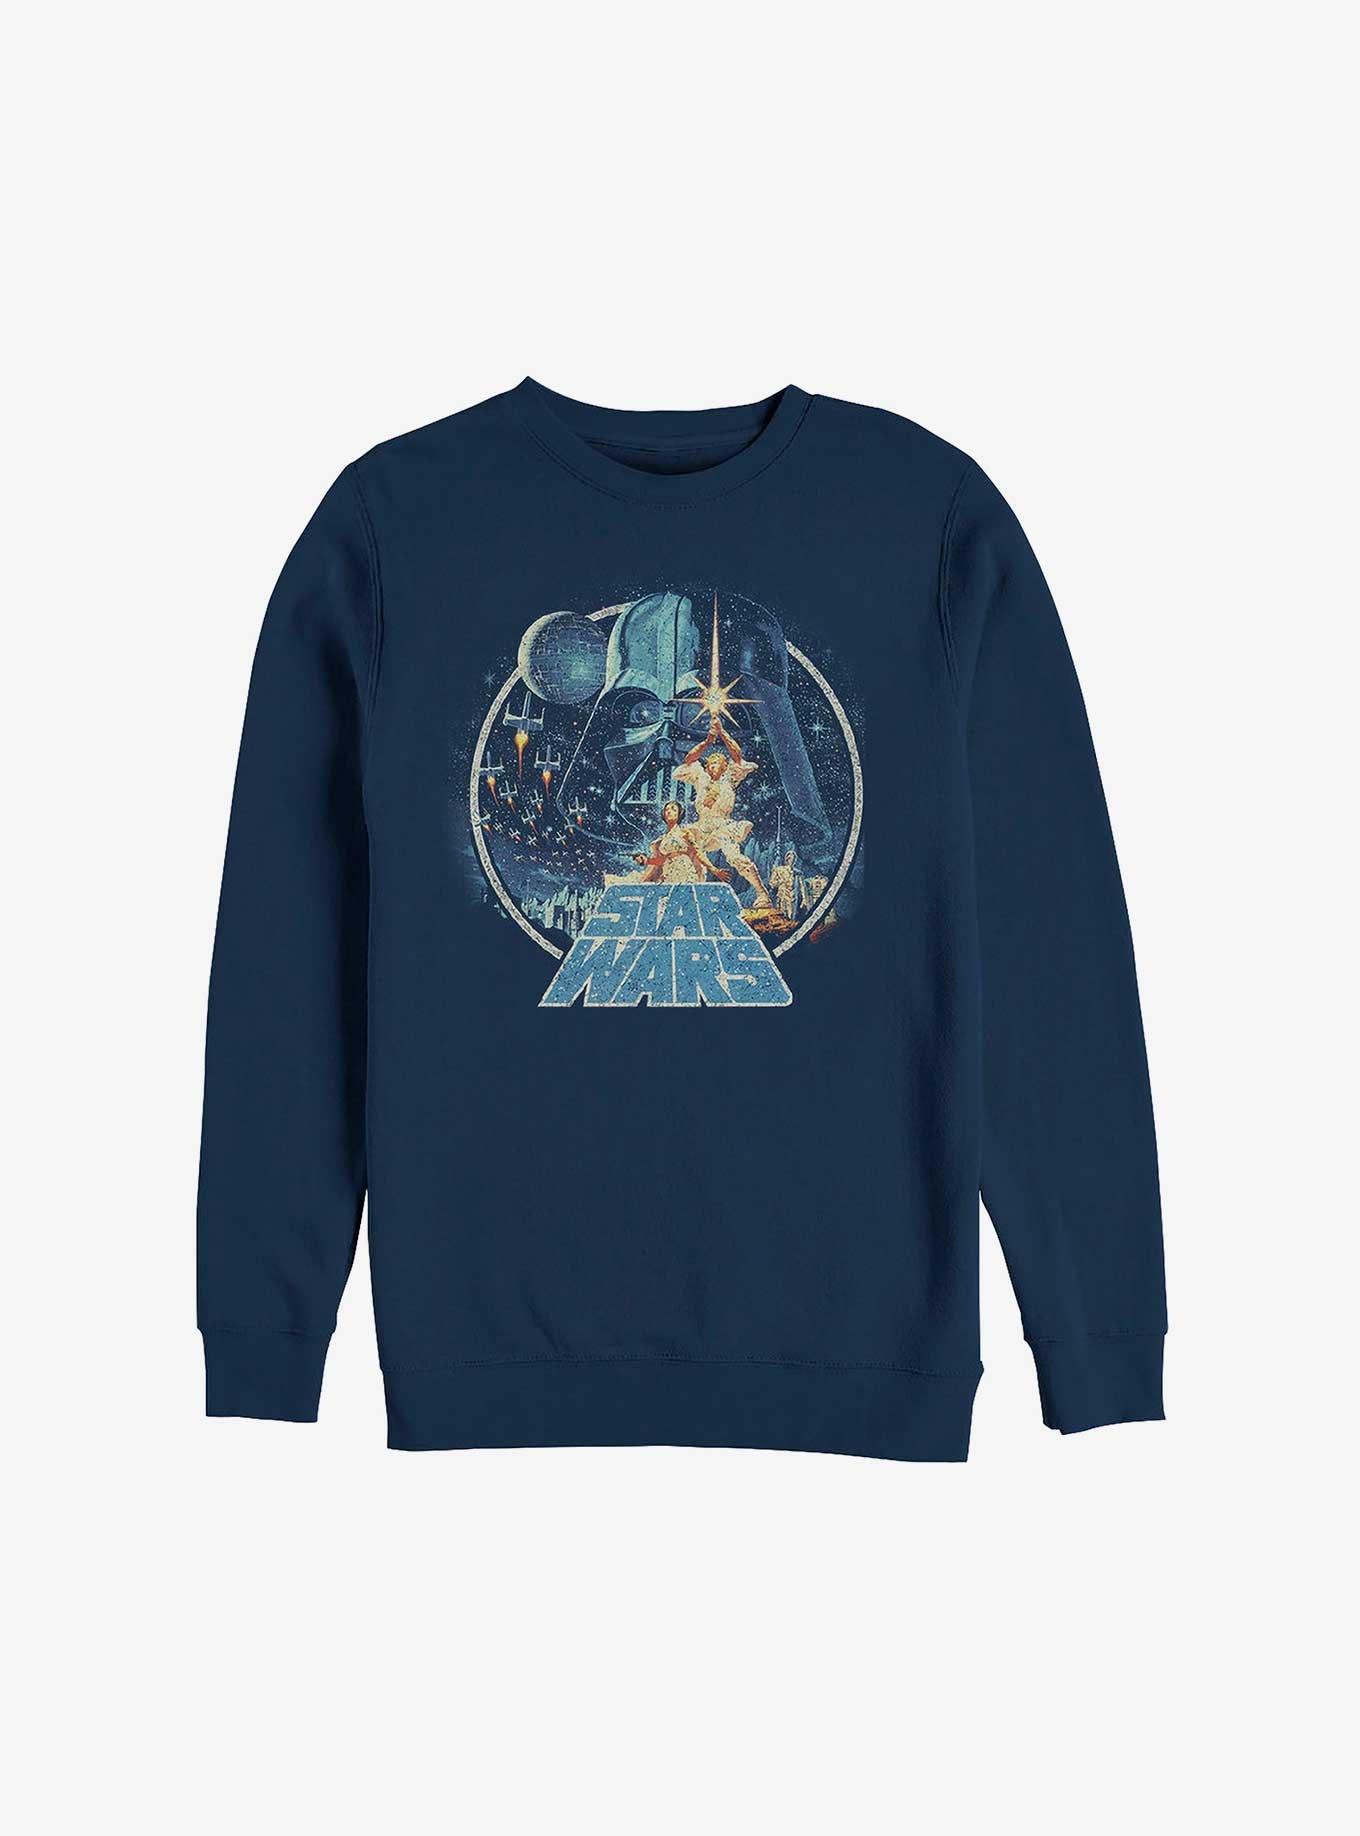 Star Wars Vintage Victory Sweatshirt T-Shirt, NAVY, hi-res